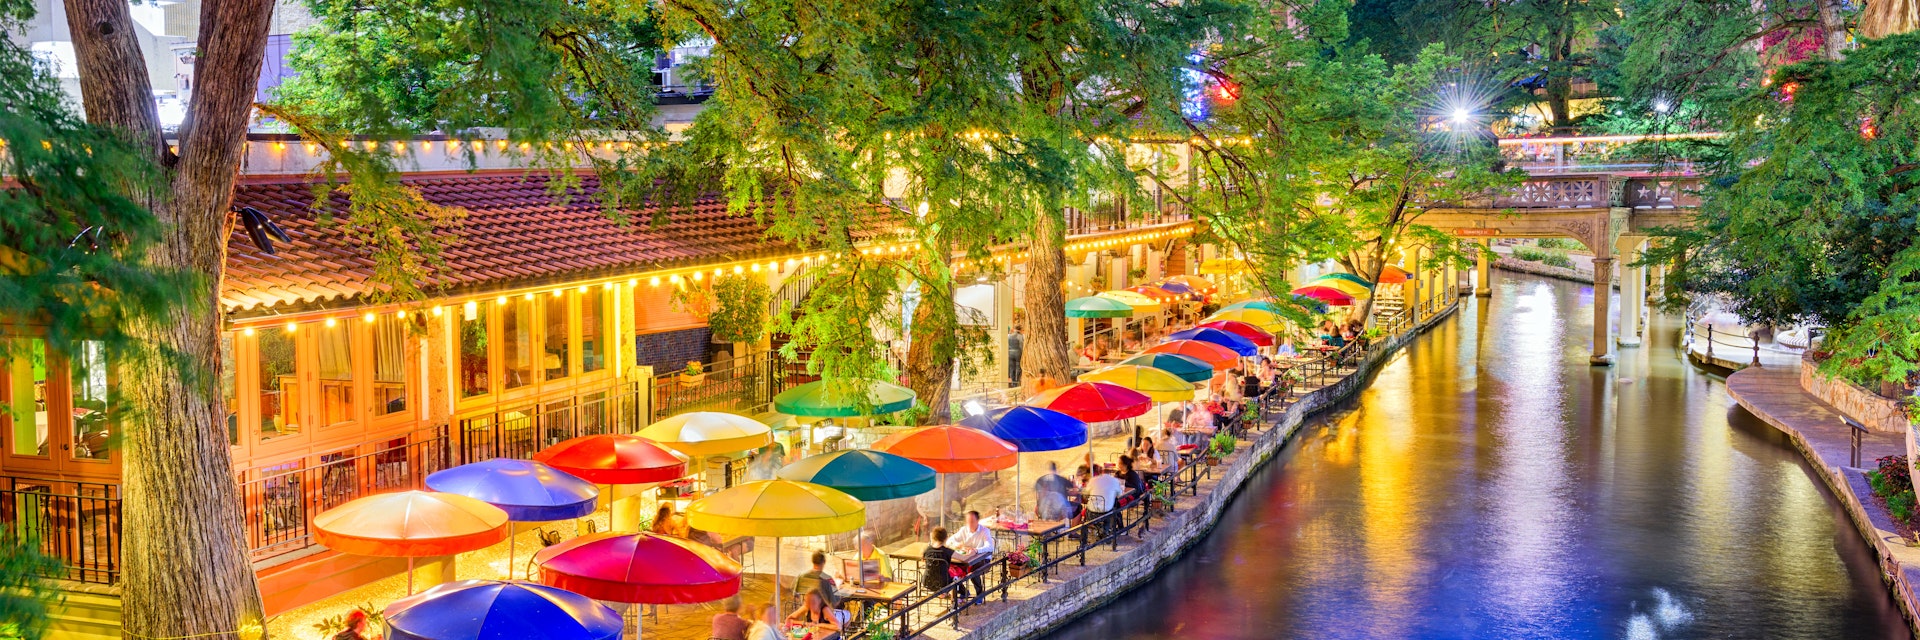 San Antonio, Texas, USA cityscape at the River Walk.